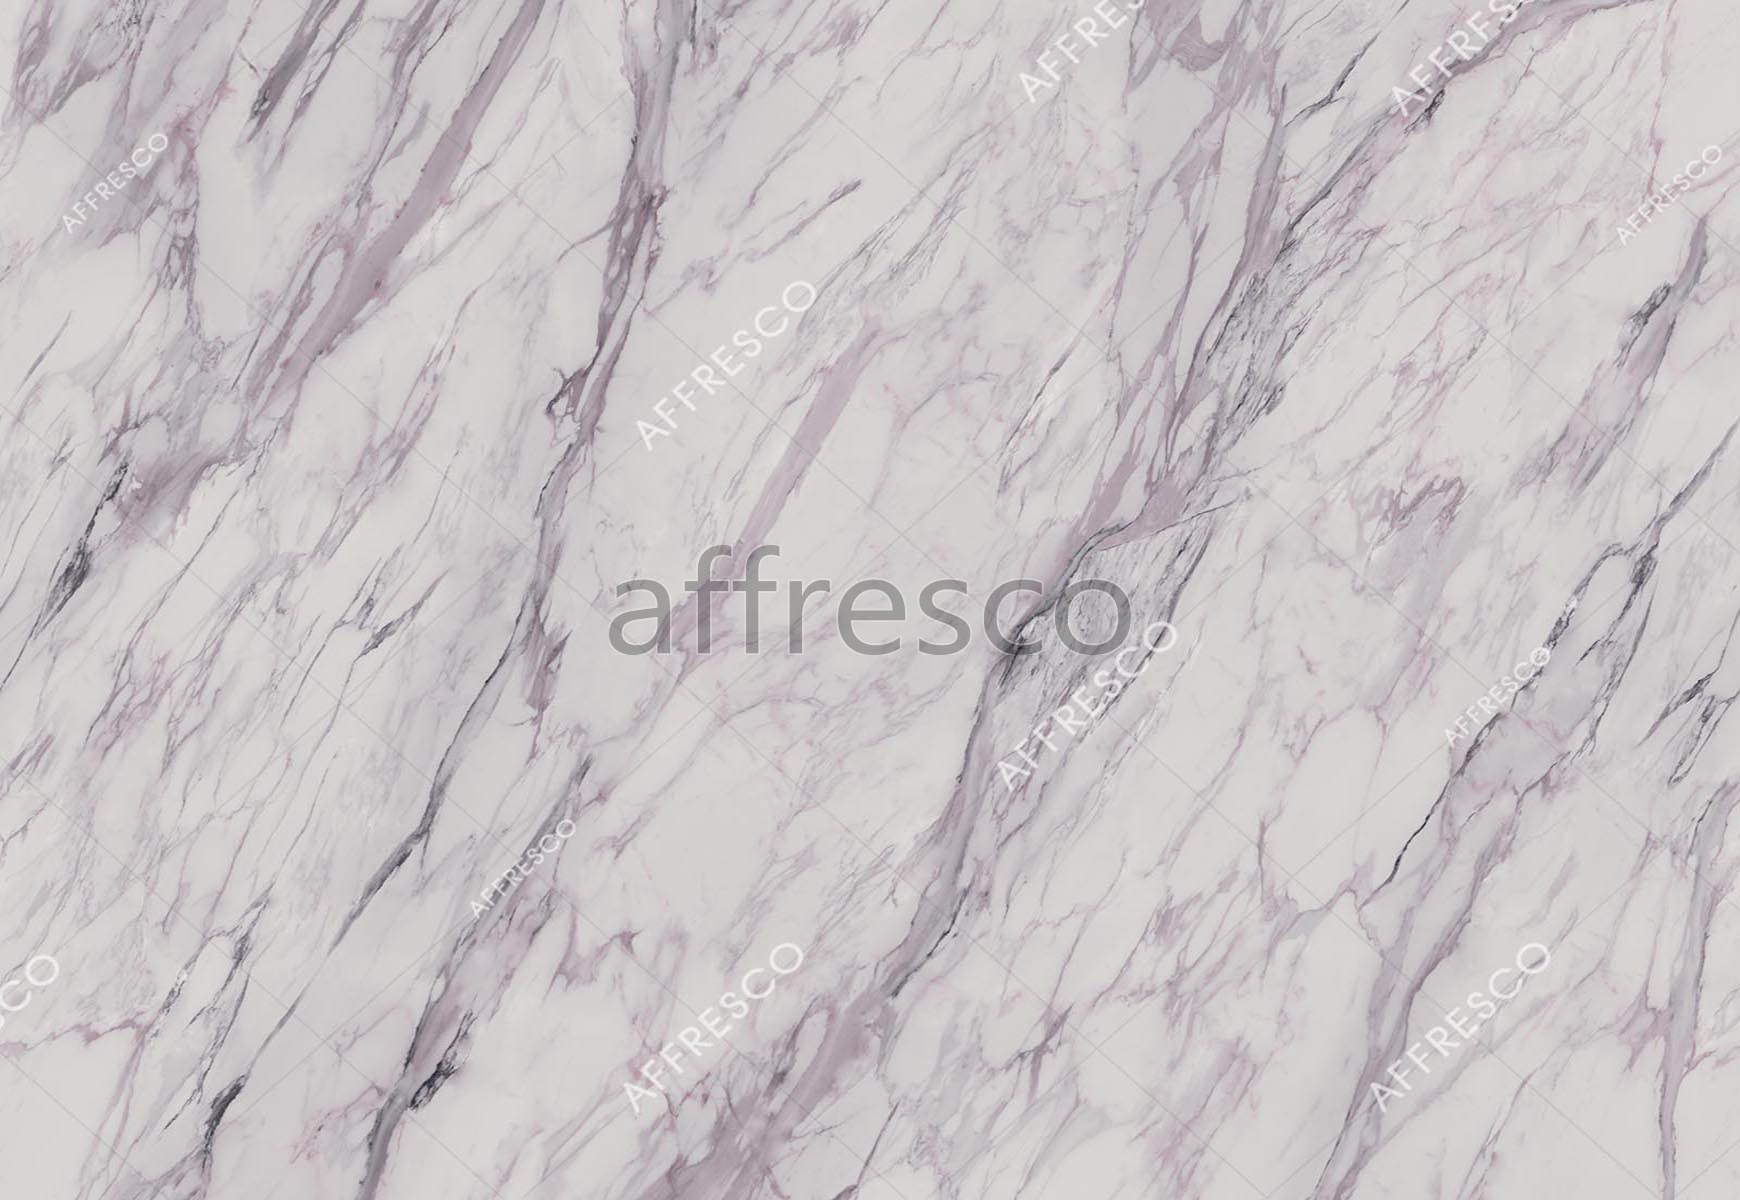 ID139069 | Fluid | marble effect | Affresco Factory